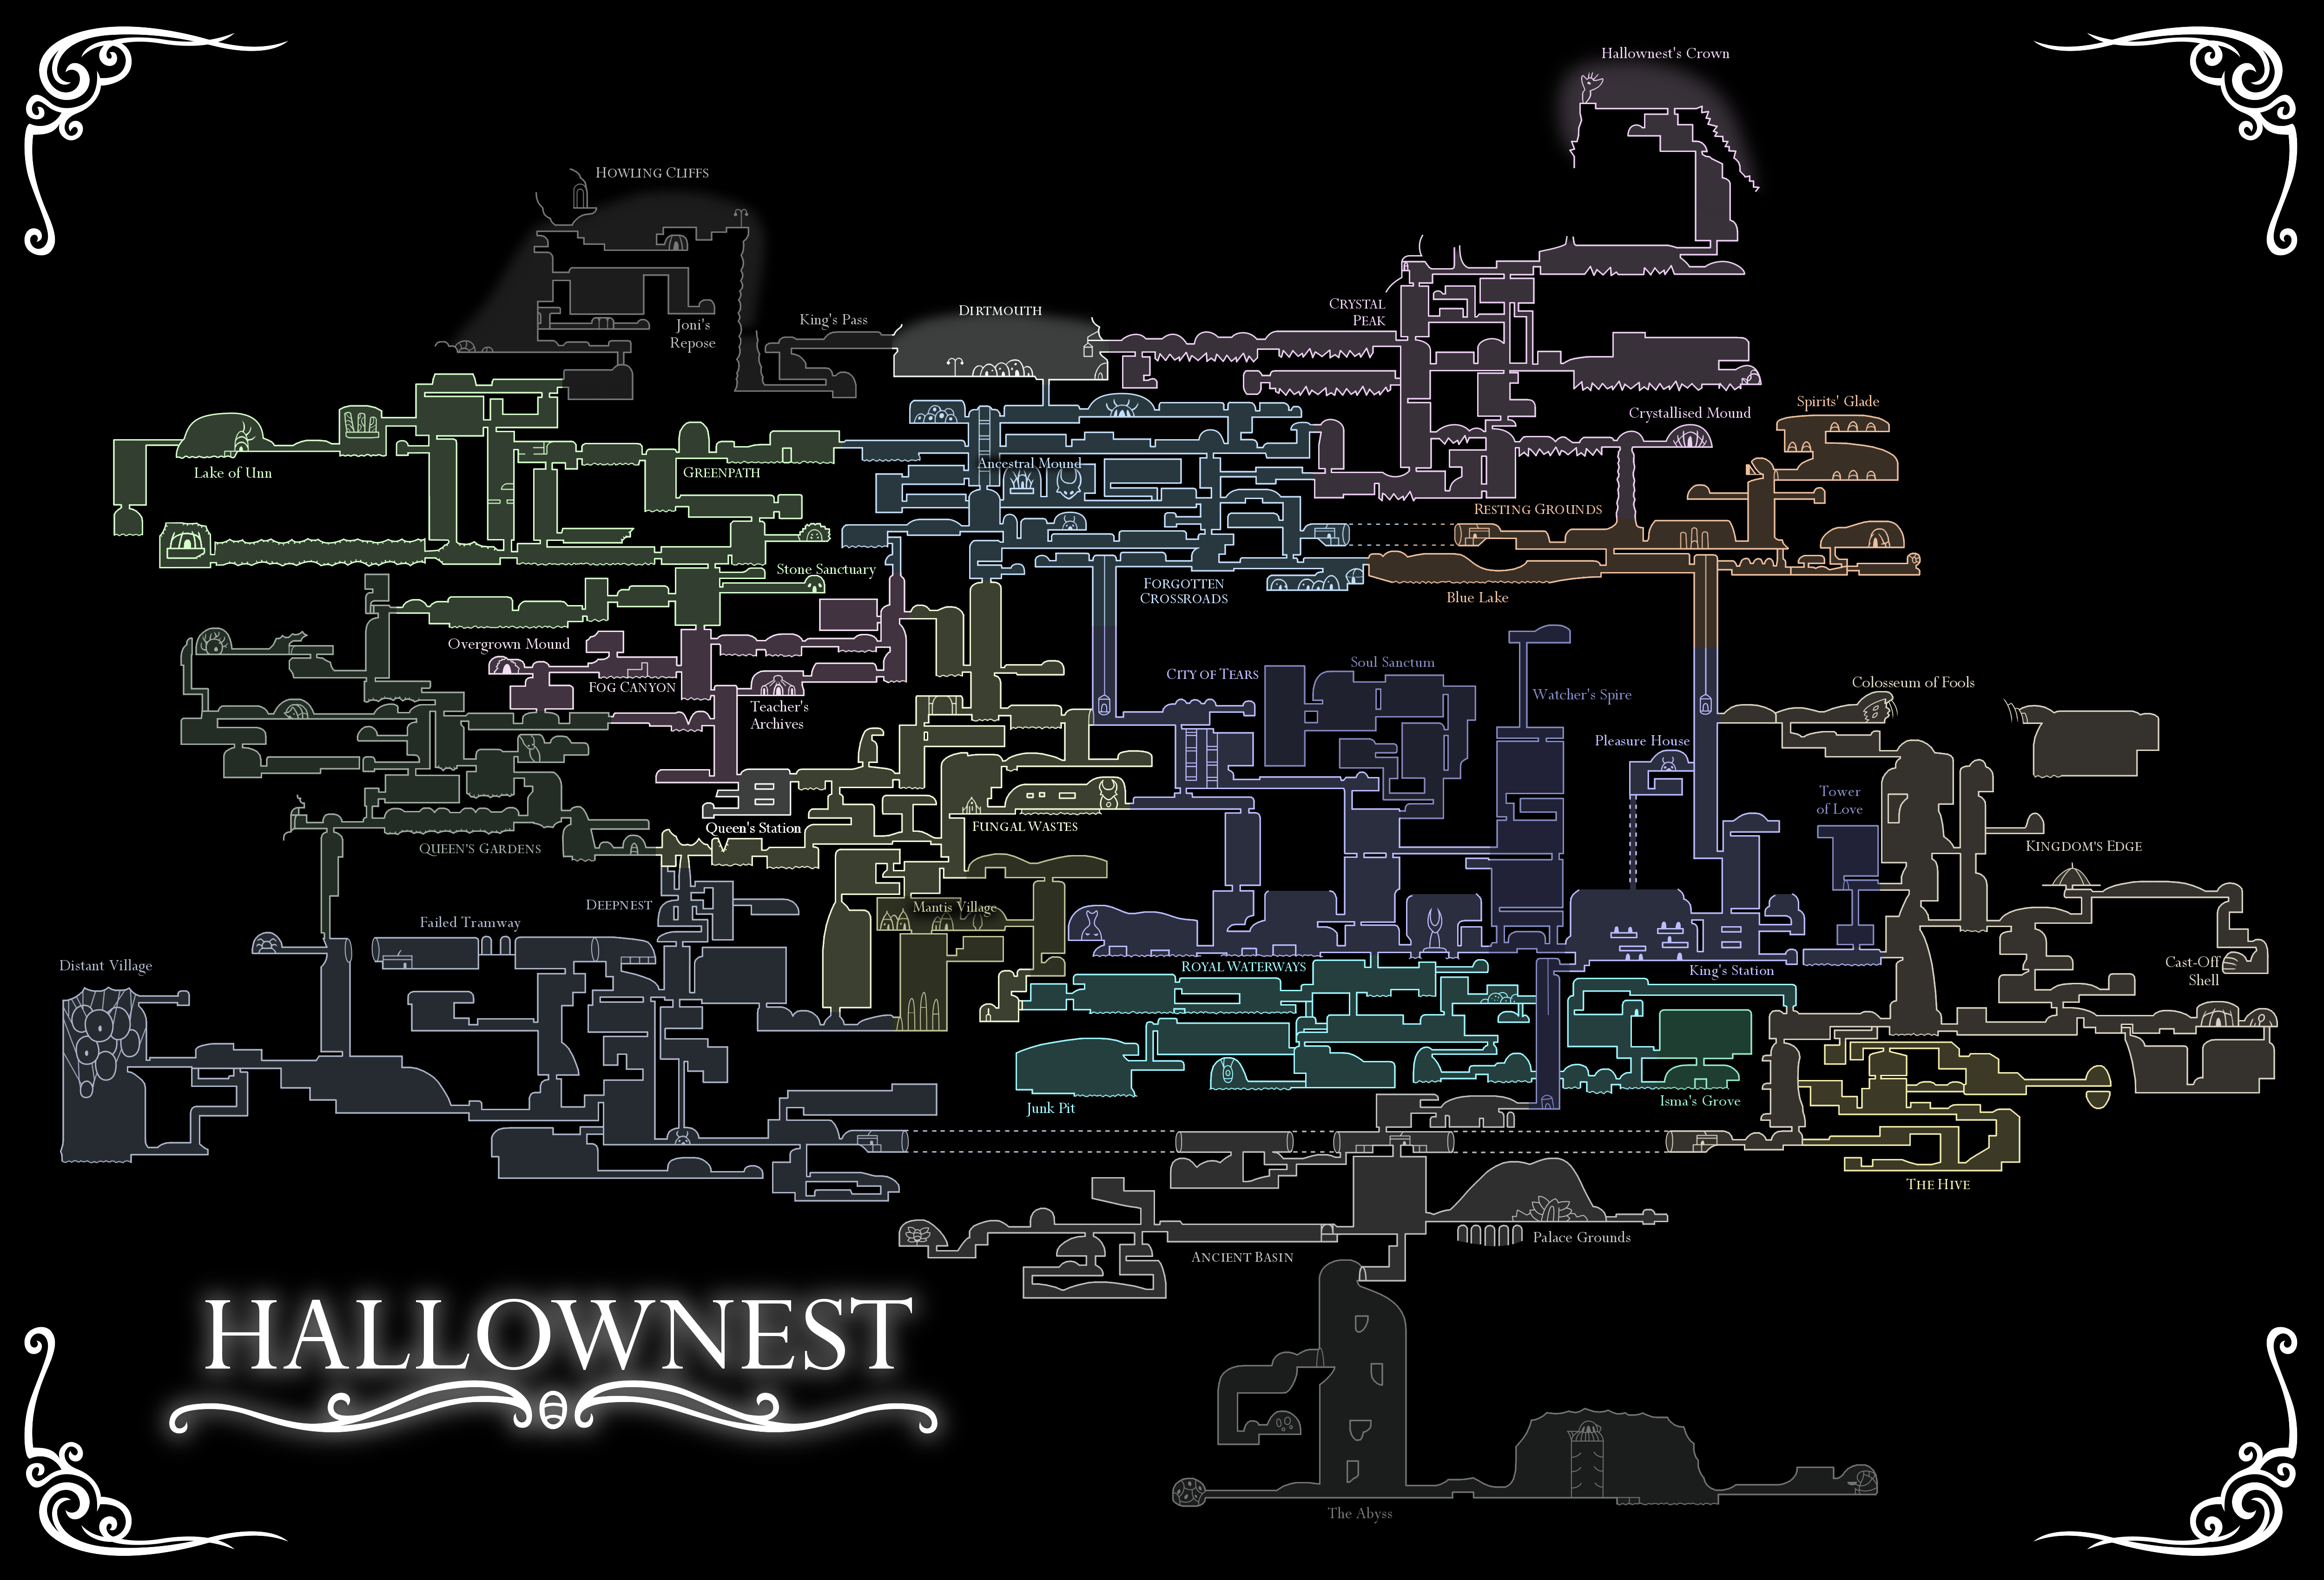 Город холов. Карта Холлоу кнайт. Hollow Knight карта. Карта Халлоунеста Hollow Knight. Полная карта Hollow Knight.